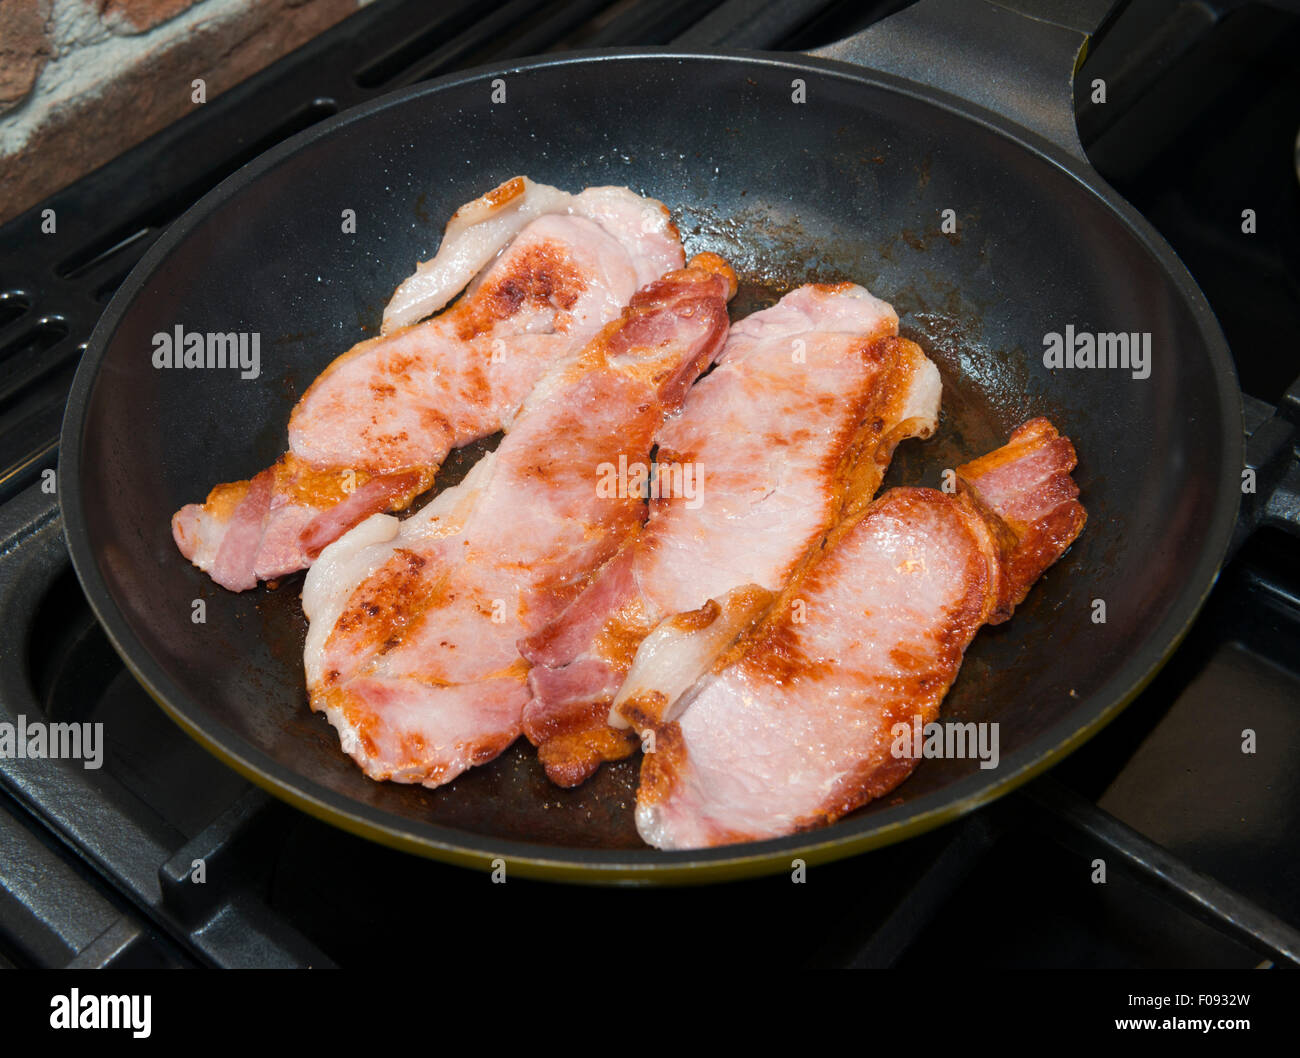 https://c8.alamy.com/comp/F0932W/bacon-cooking-in-a-frying-pan-F0932W.jpg